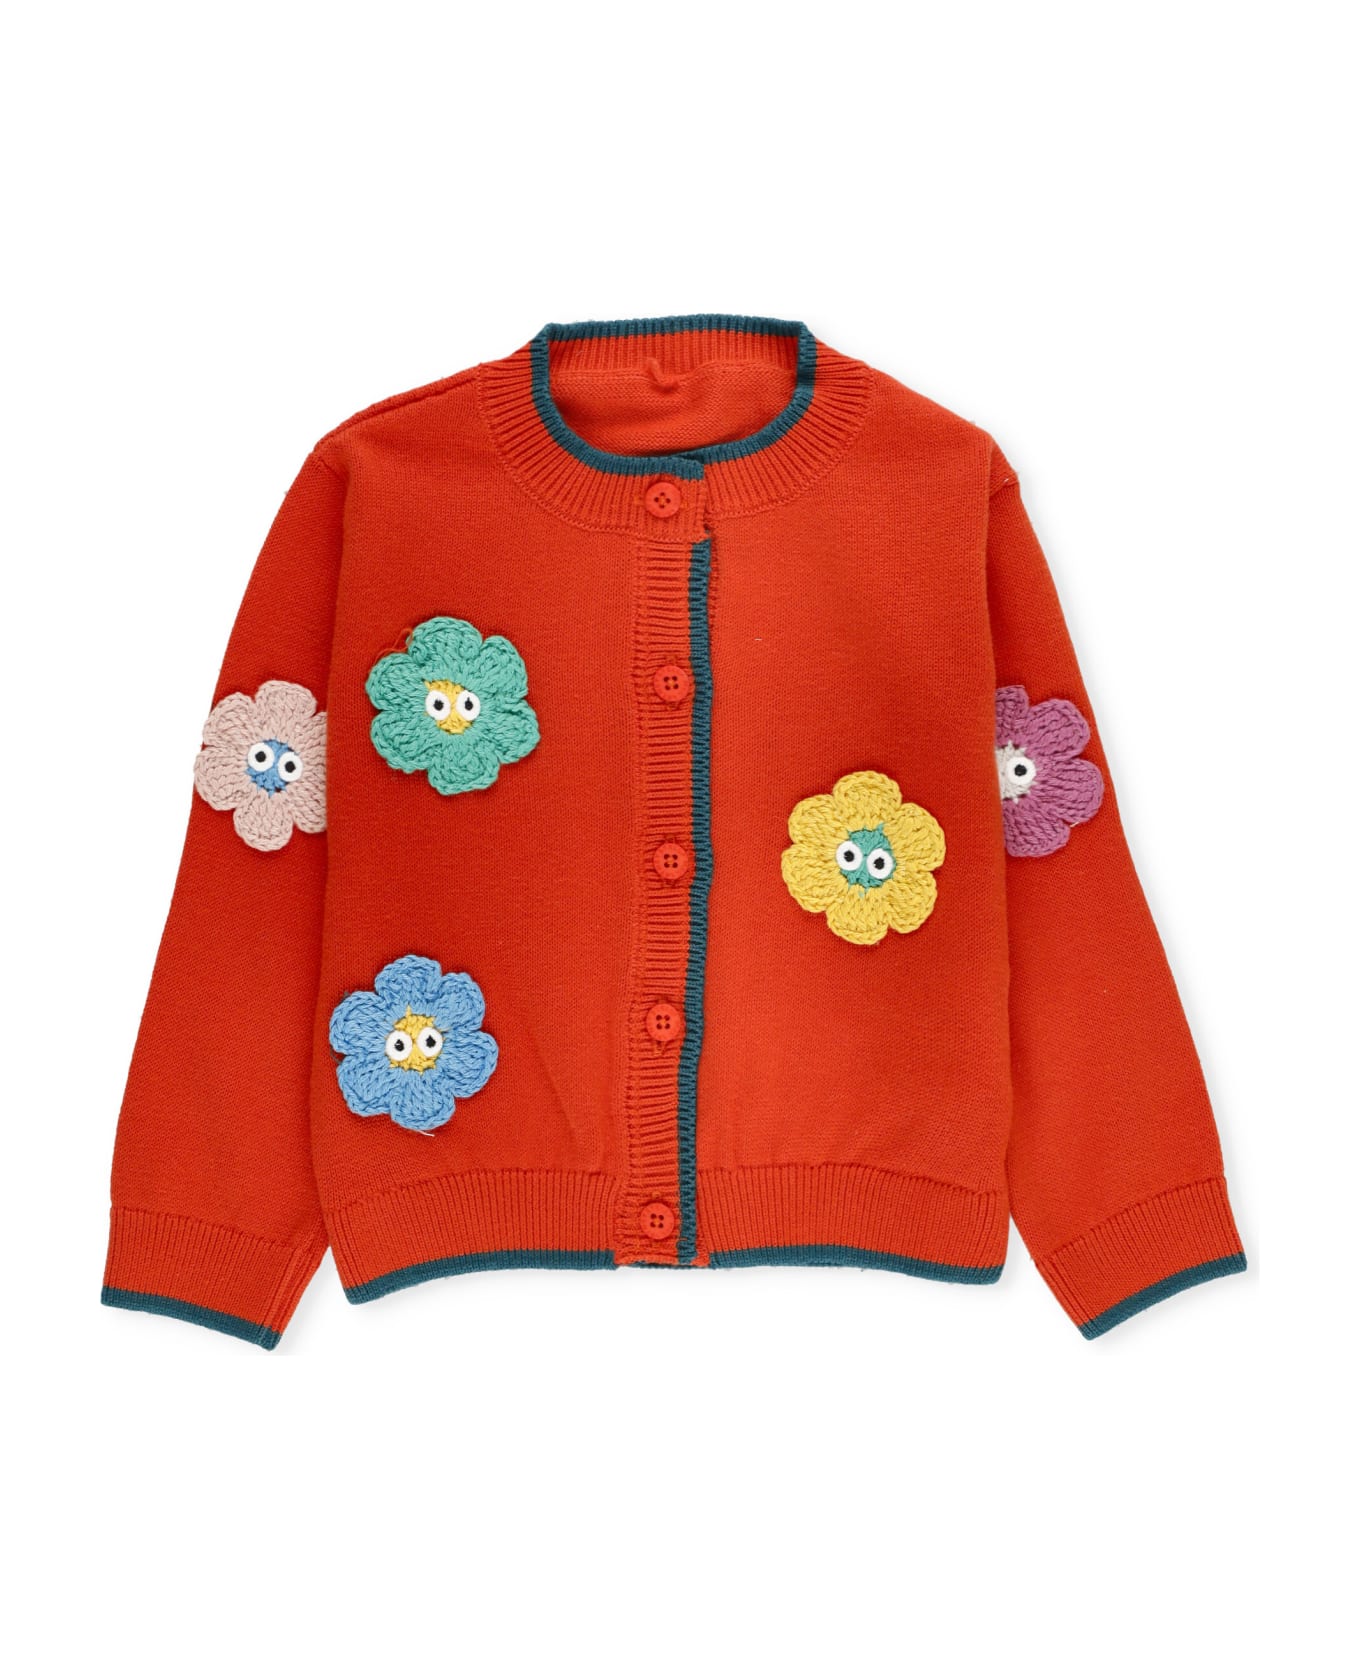 Stella McCartney Kids Cardigan With Embroideries - Orange